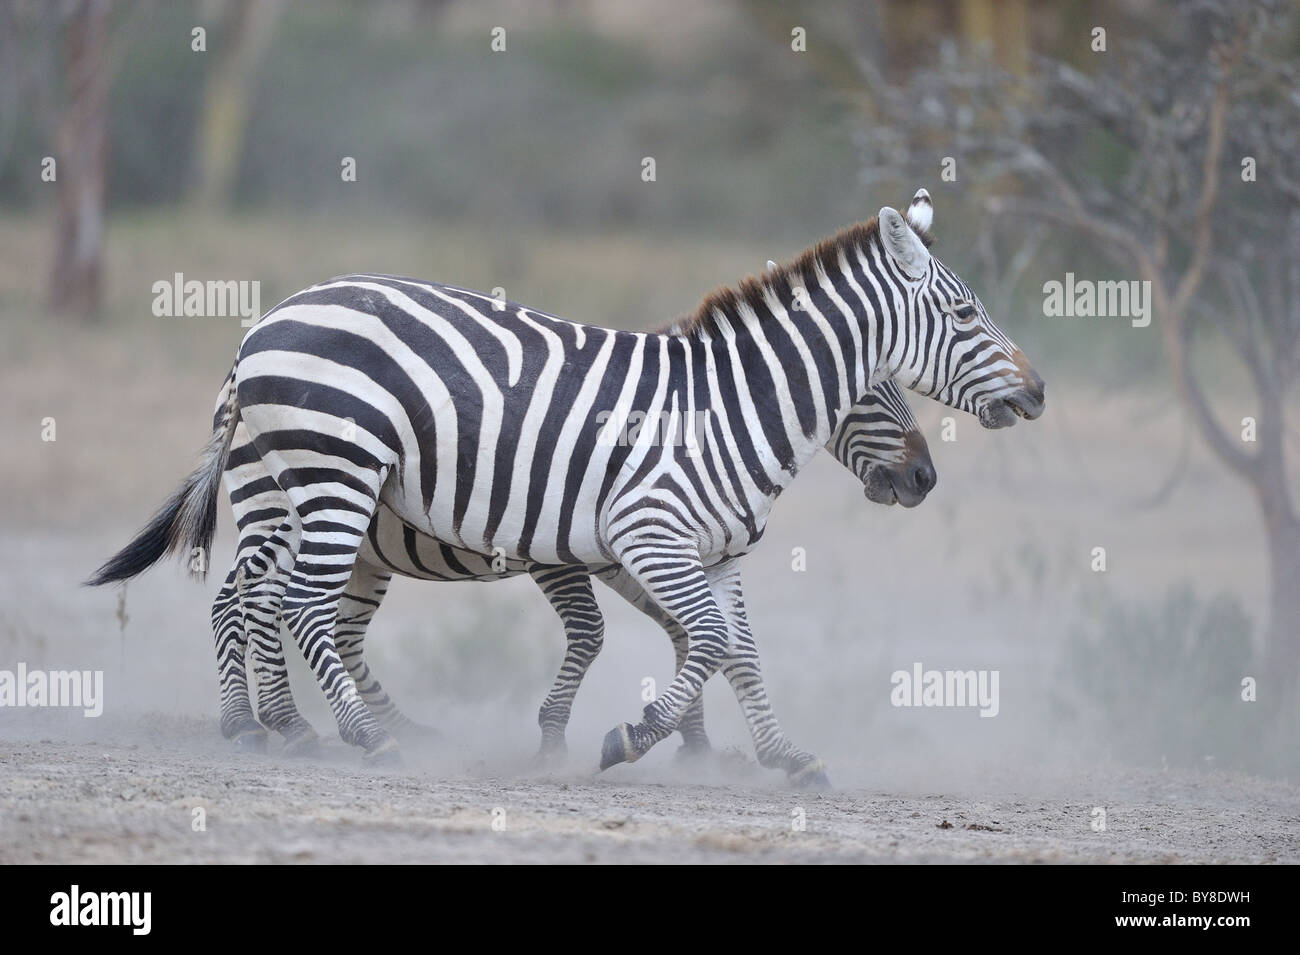 Plains zebra - Burchell's zebra (Equus quagga - formerly Equus burchellii boehmi) pair play-fighting in the dust Stock Photo